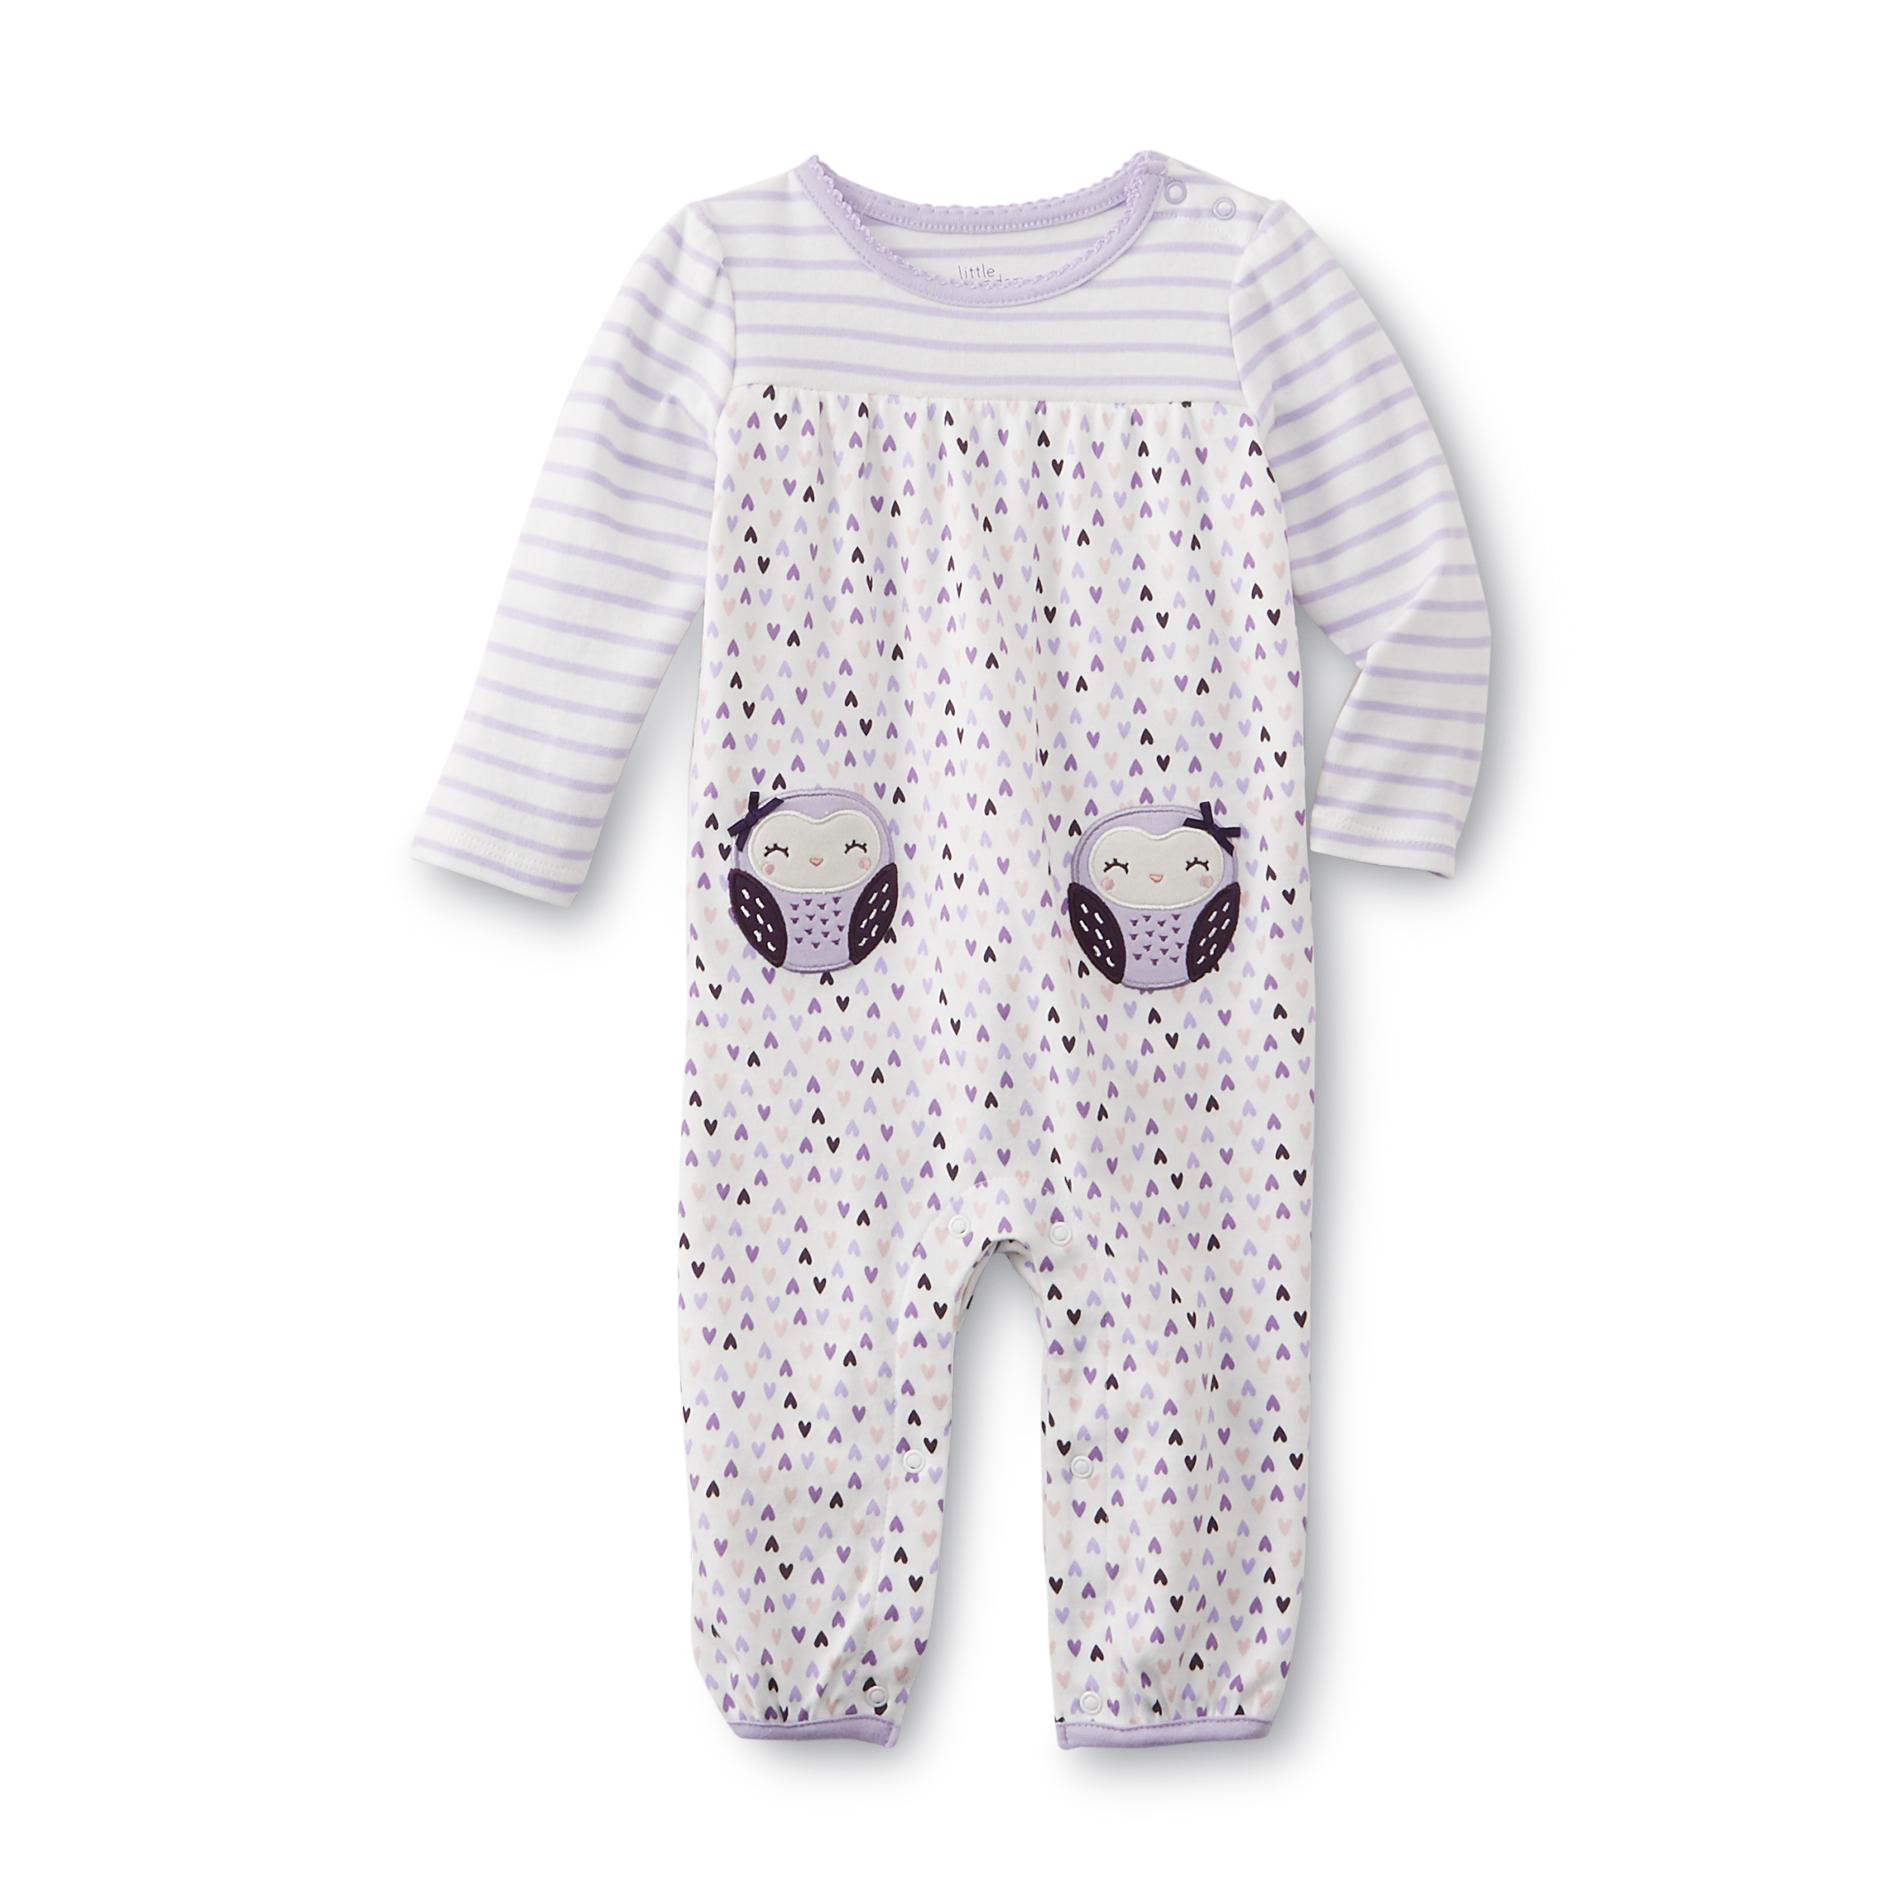 Little Wonders Newborn & Infant Girl's Long-Sleeve Bodysuit - Owls